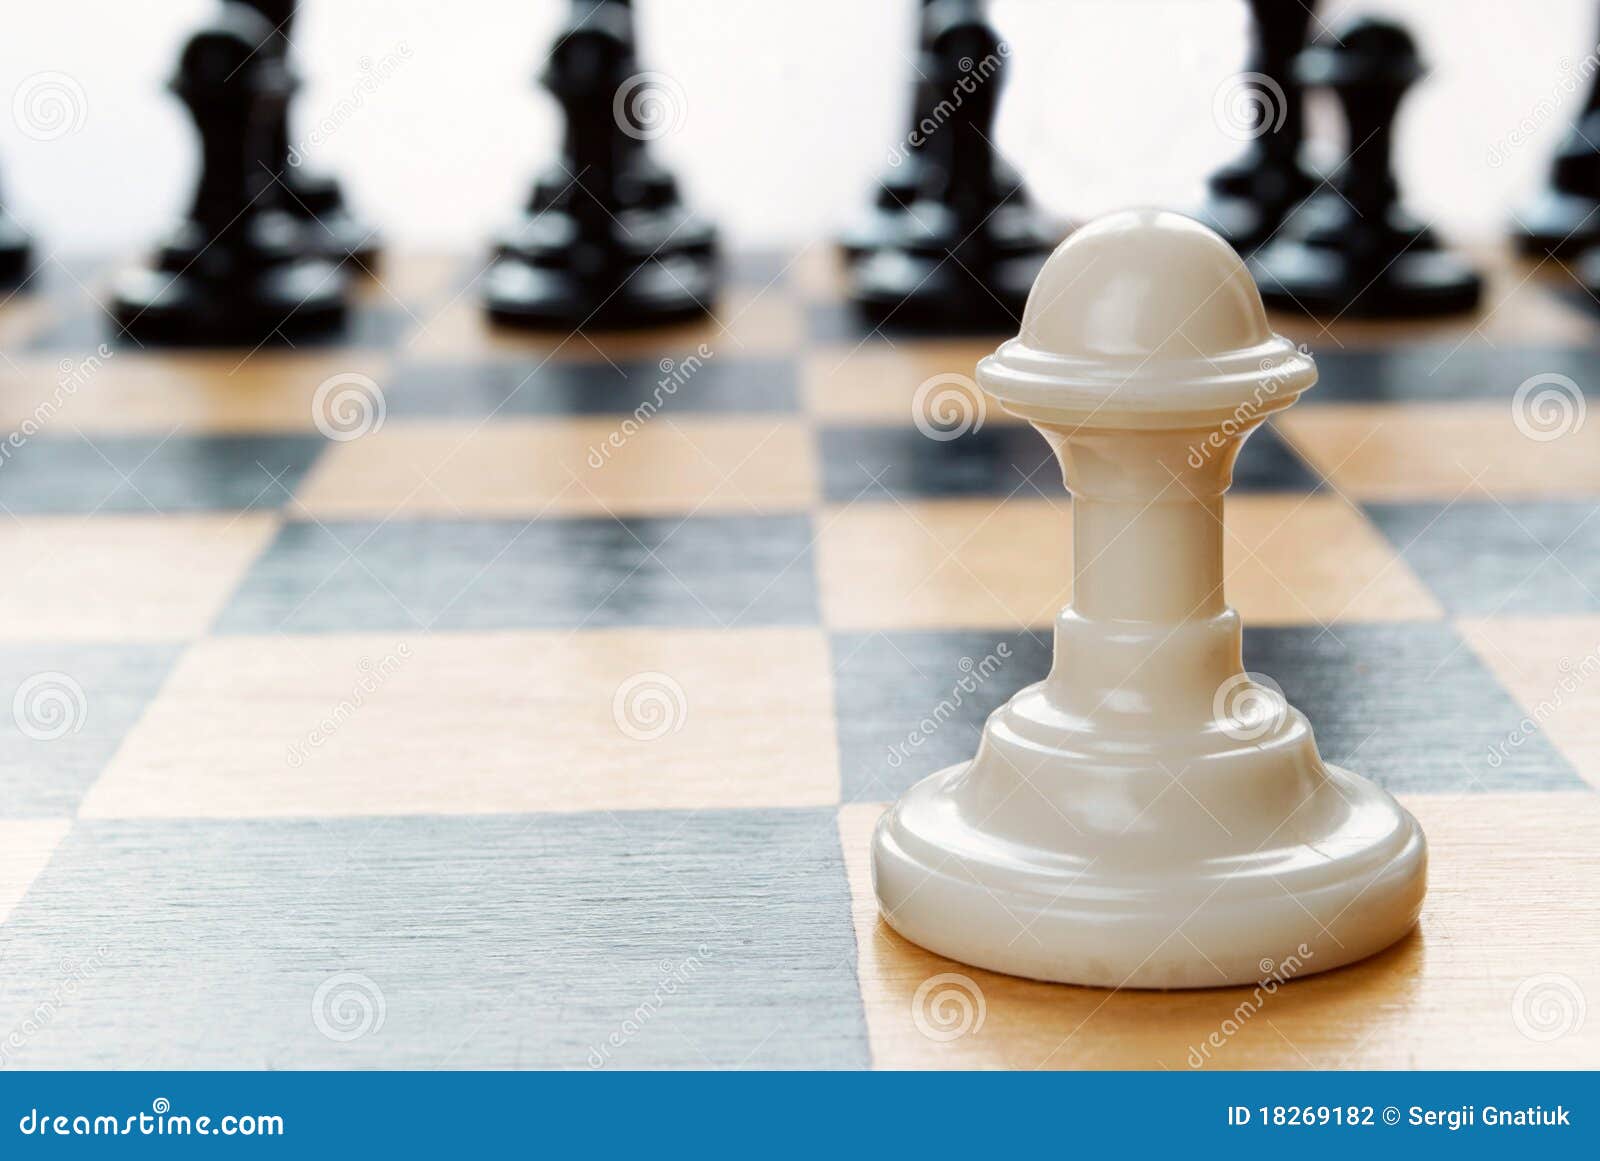 15 ideas de Ajedrez21  ajedrez, ajedrez de madera, piezas de ajedrez